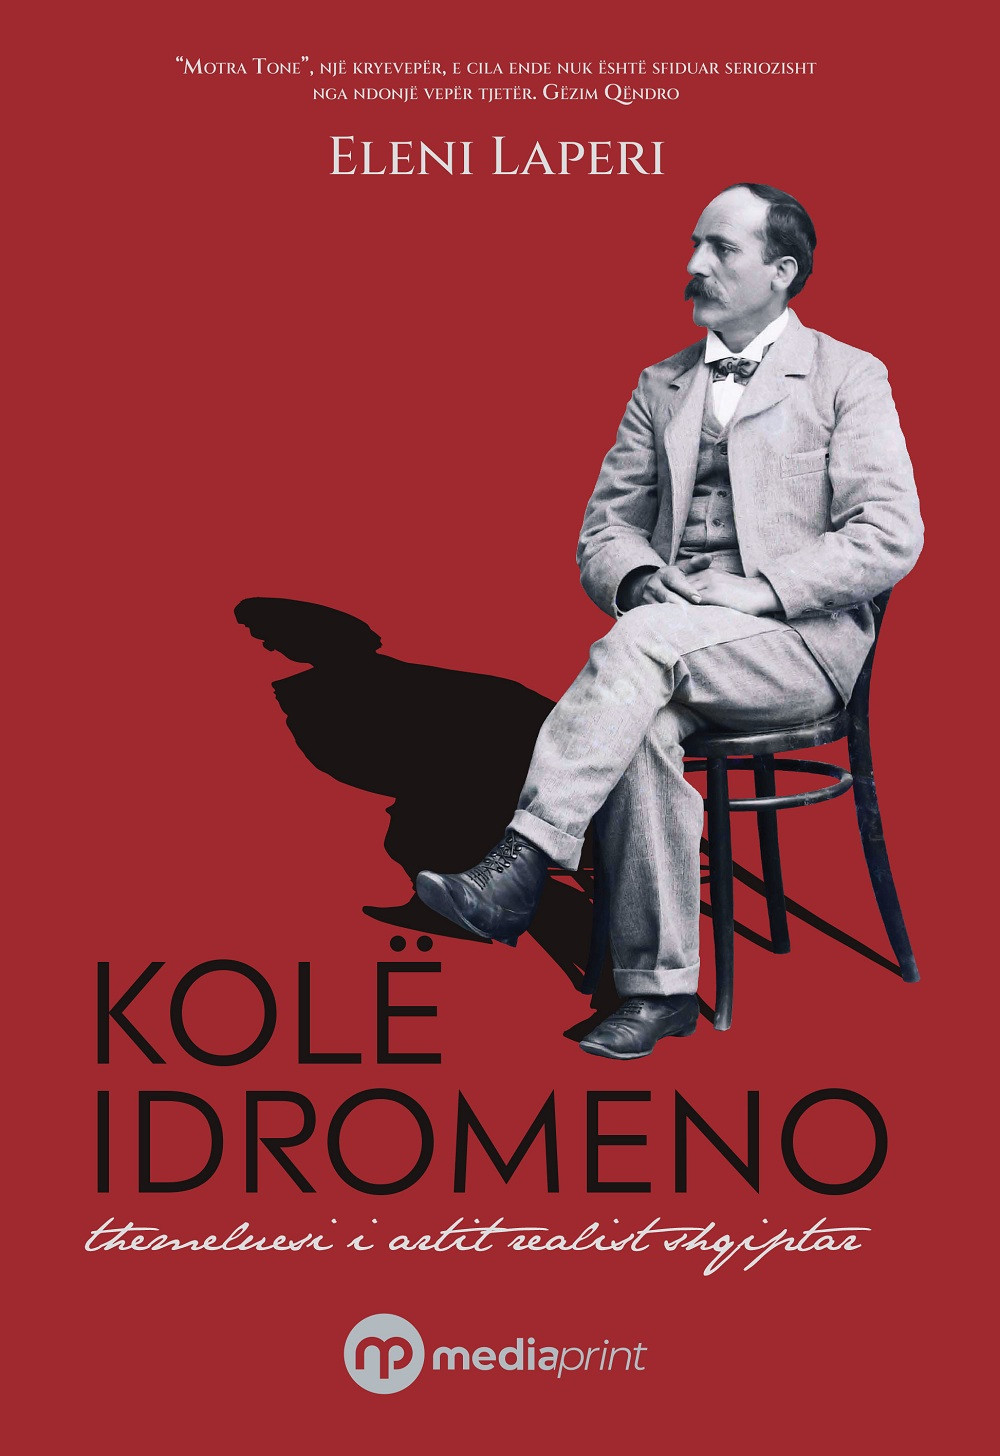 Kole Idromeno - themeluesi i artit realist shqiptar